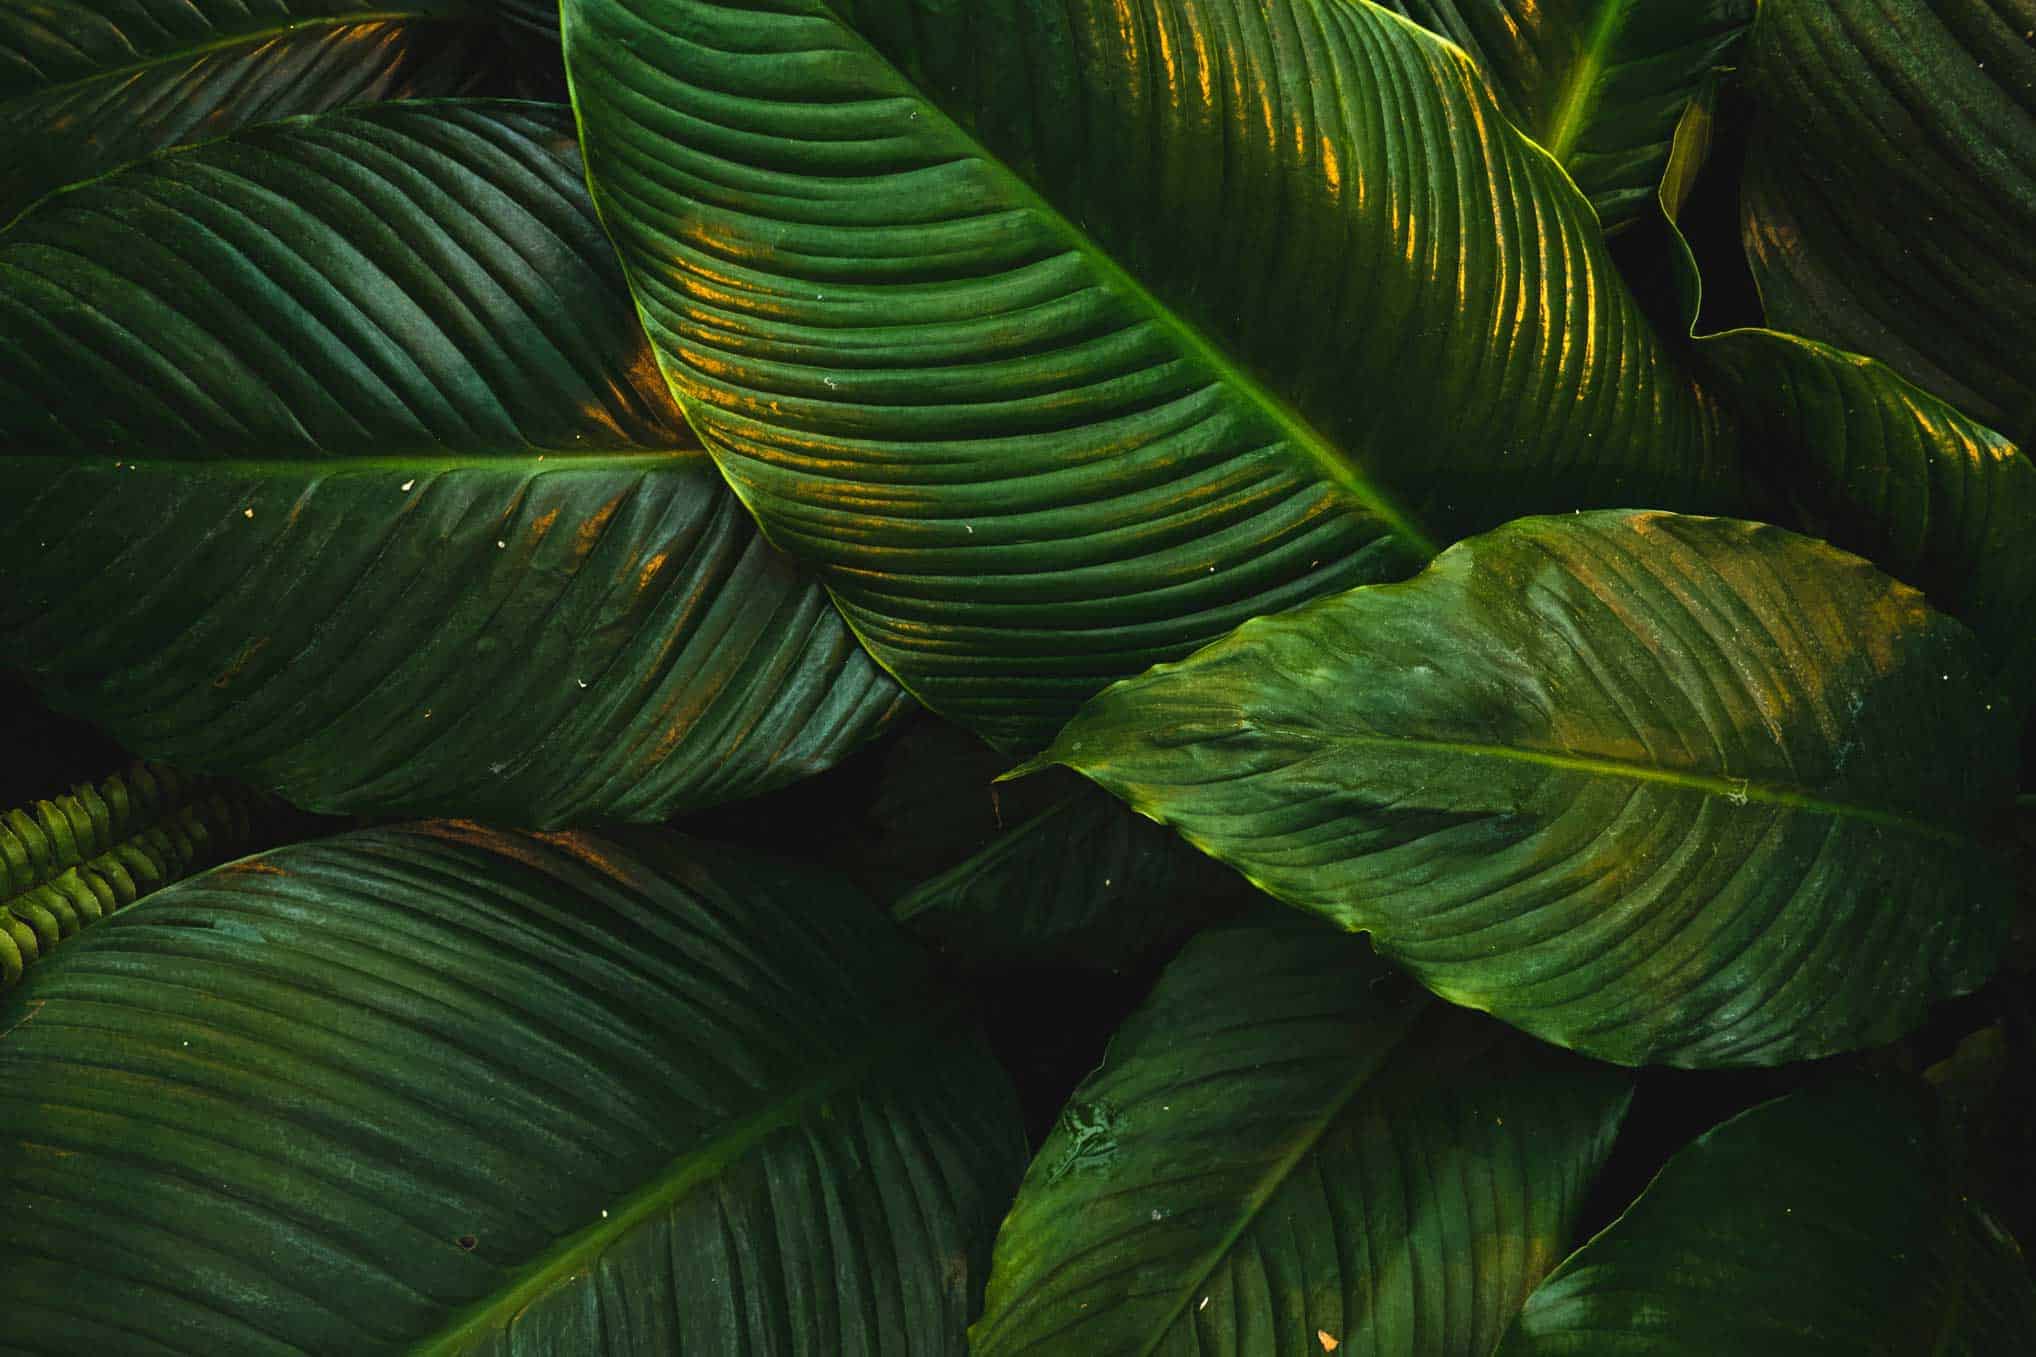 Ecosafe Green | Zero waste - leaves